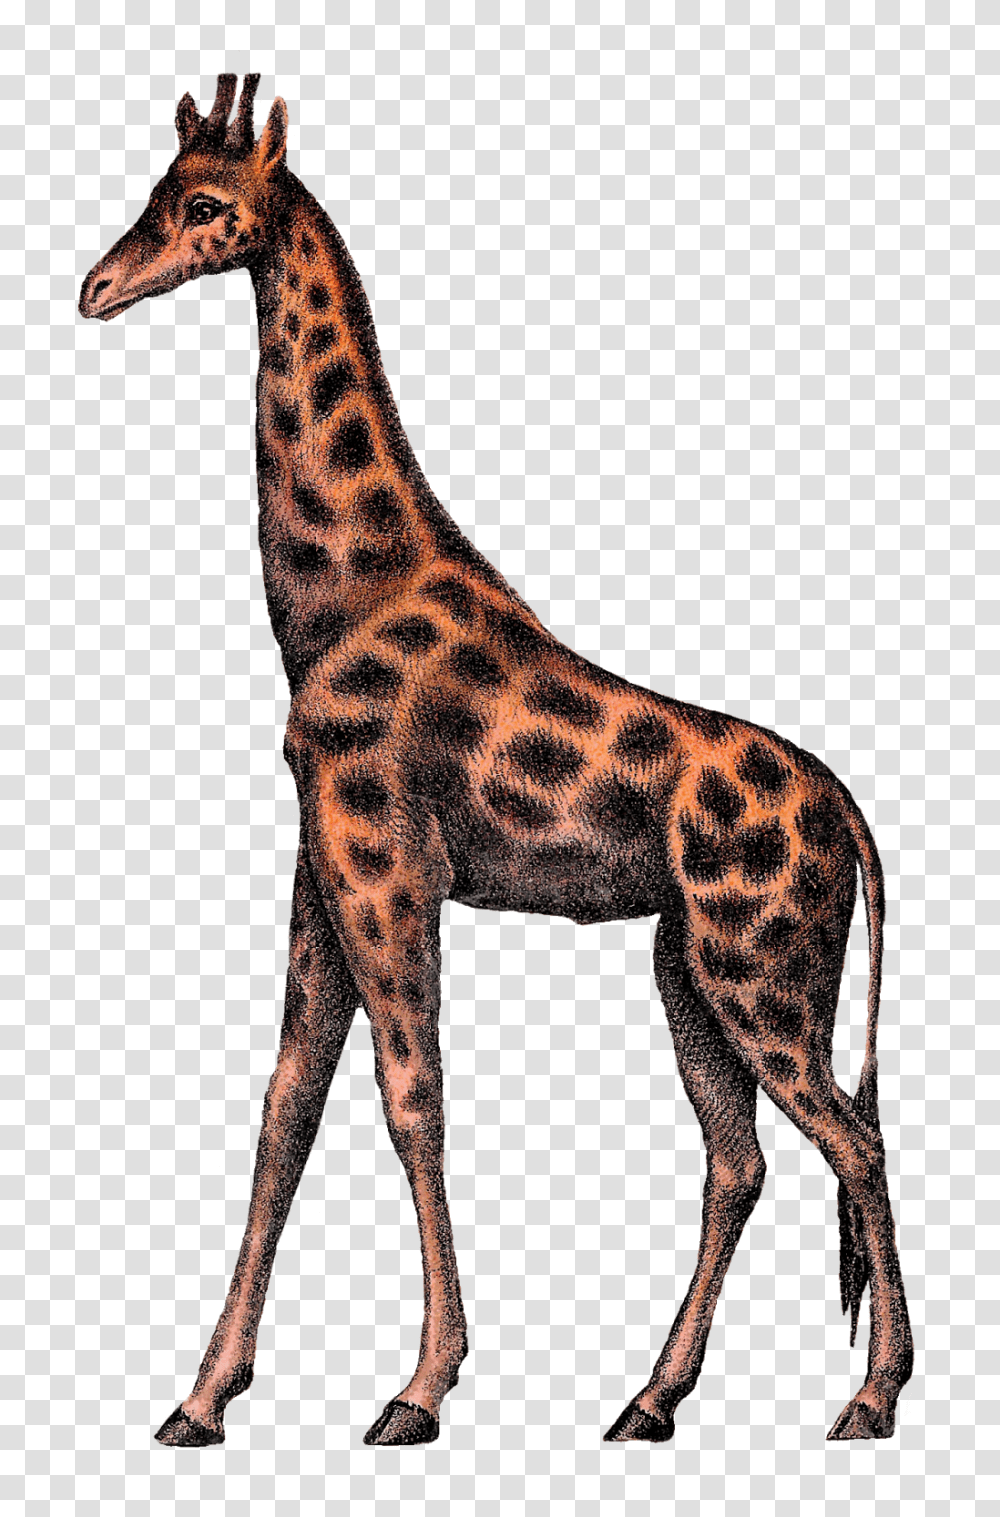 Antique Images Vintage Giraffe Digital Clipart Image Circus, Wildlife, Mammal, Animal, Panther Transparent Png